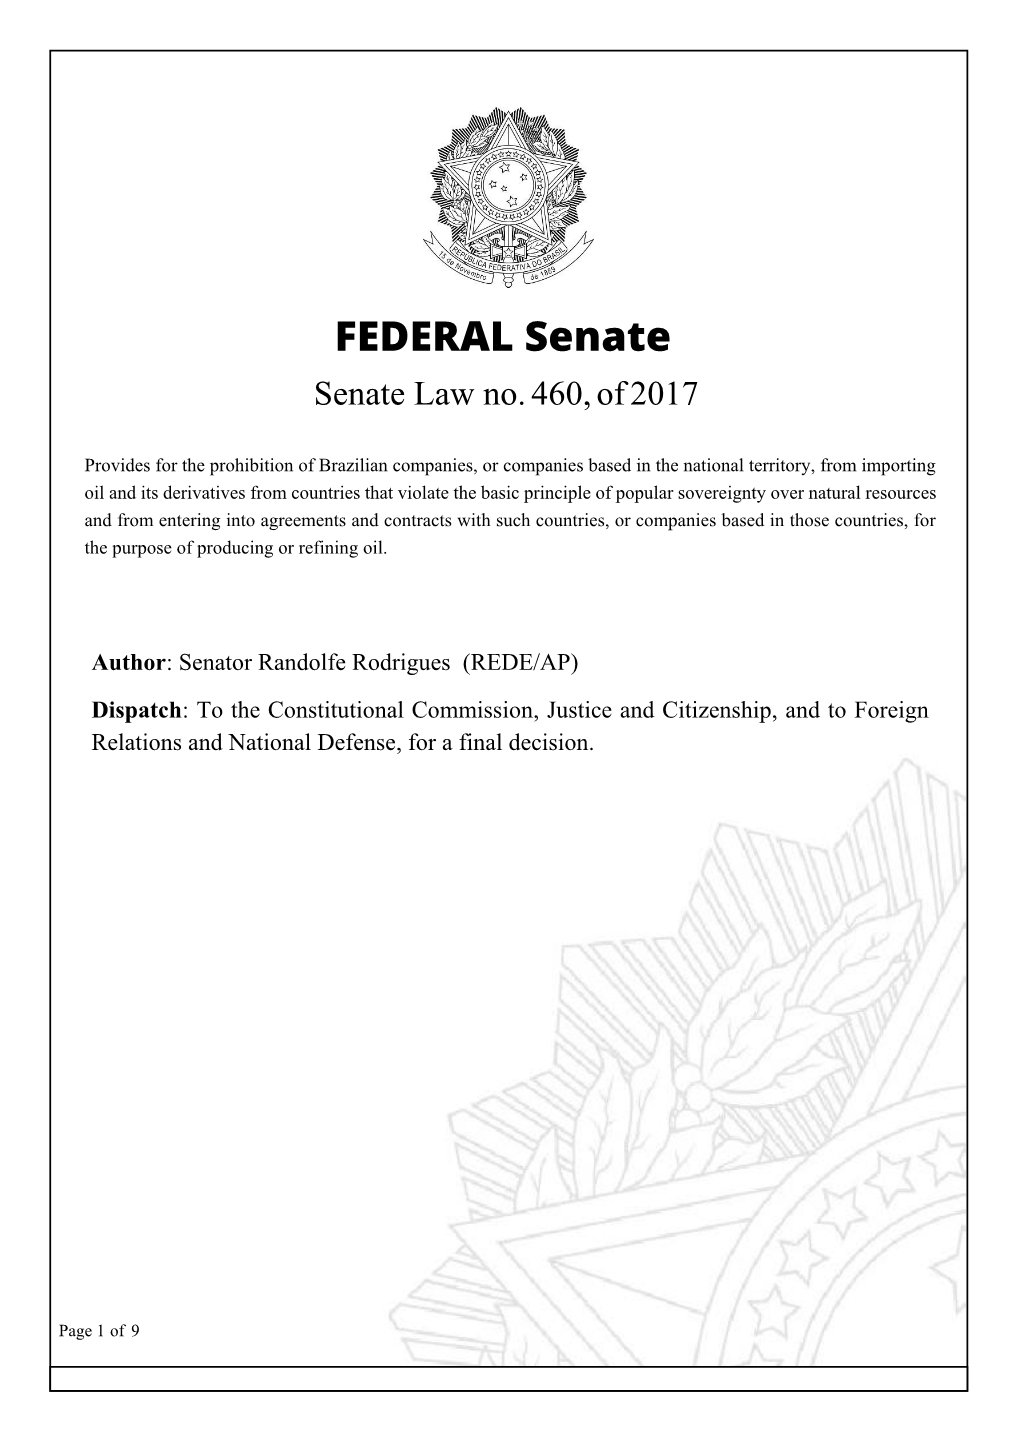 FEDERAL Senate Senate Law No